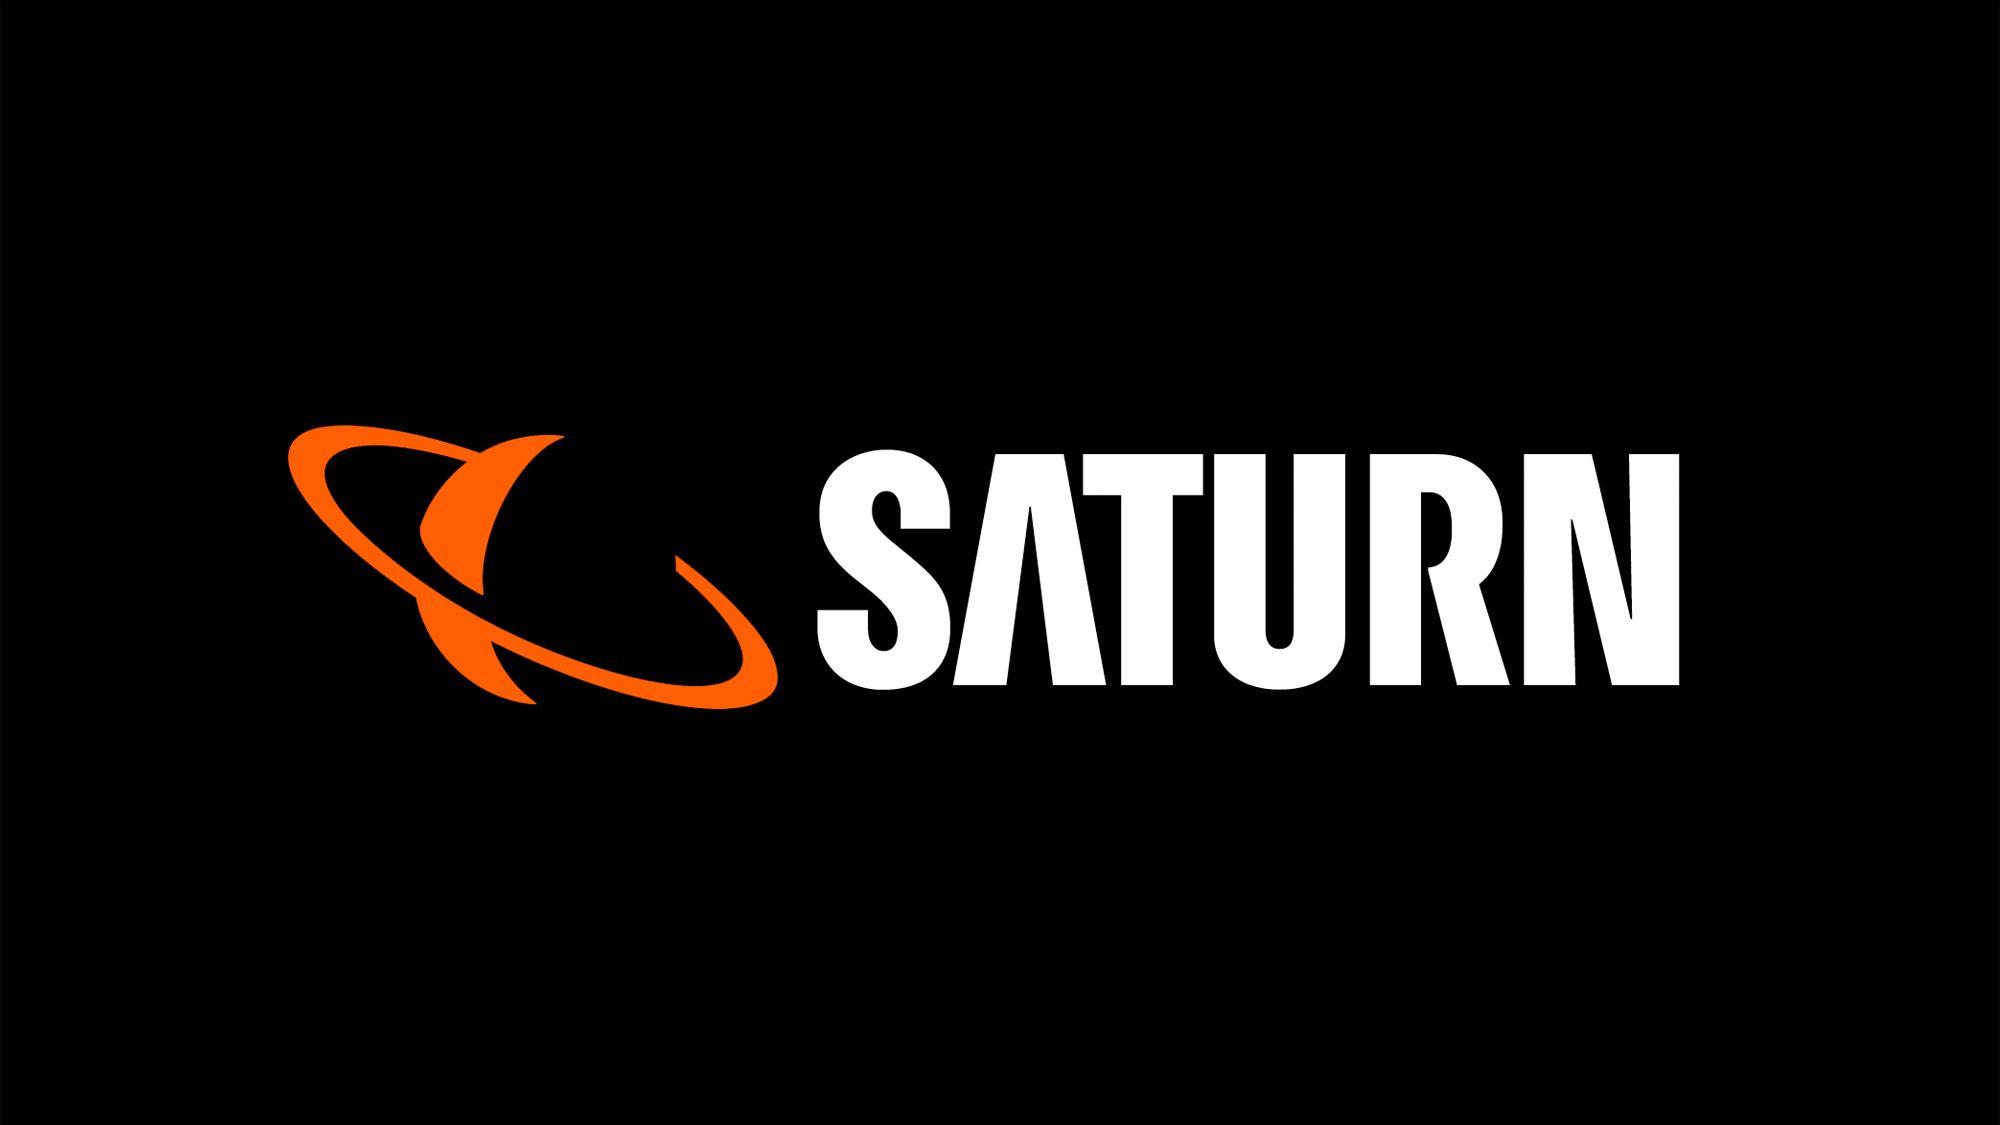 Saturn's Logo - Saturn car Logos